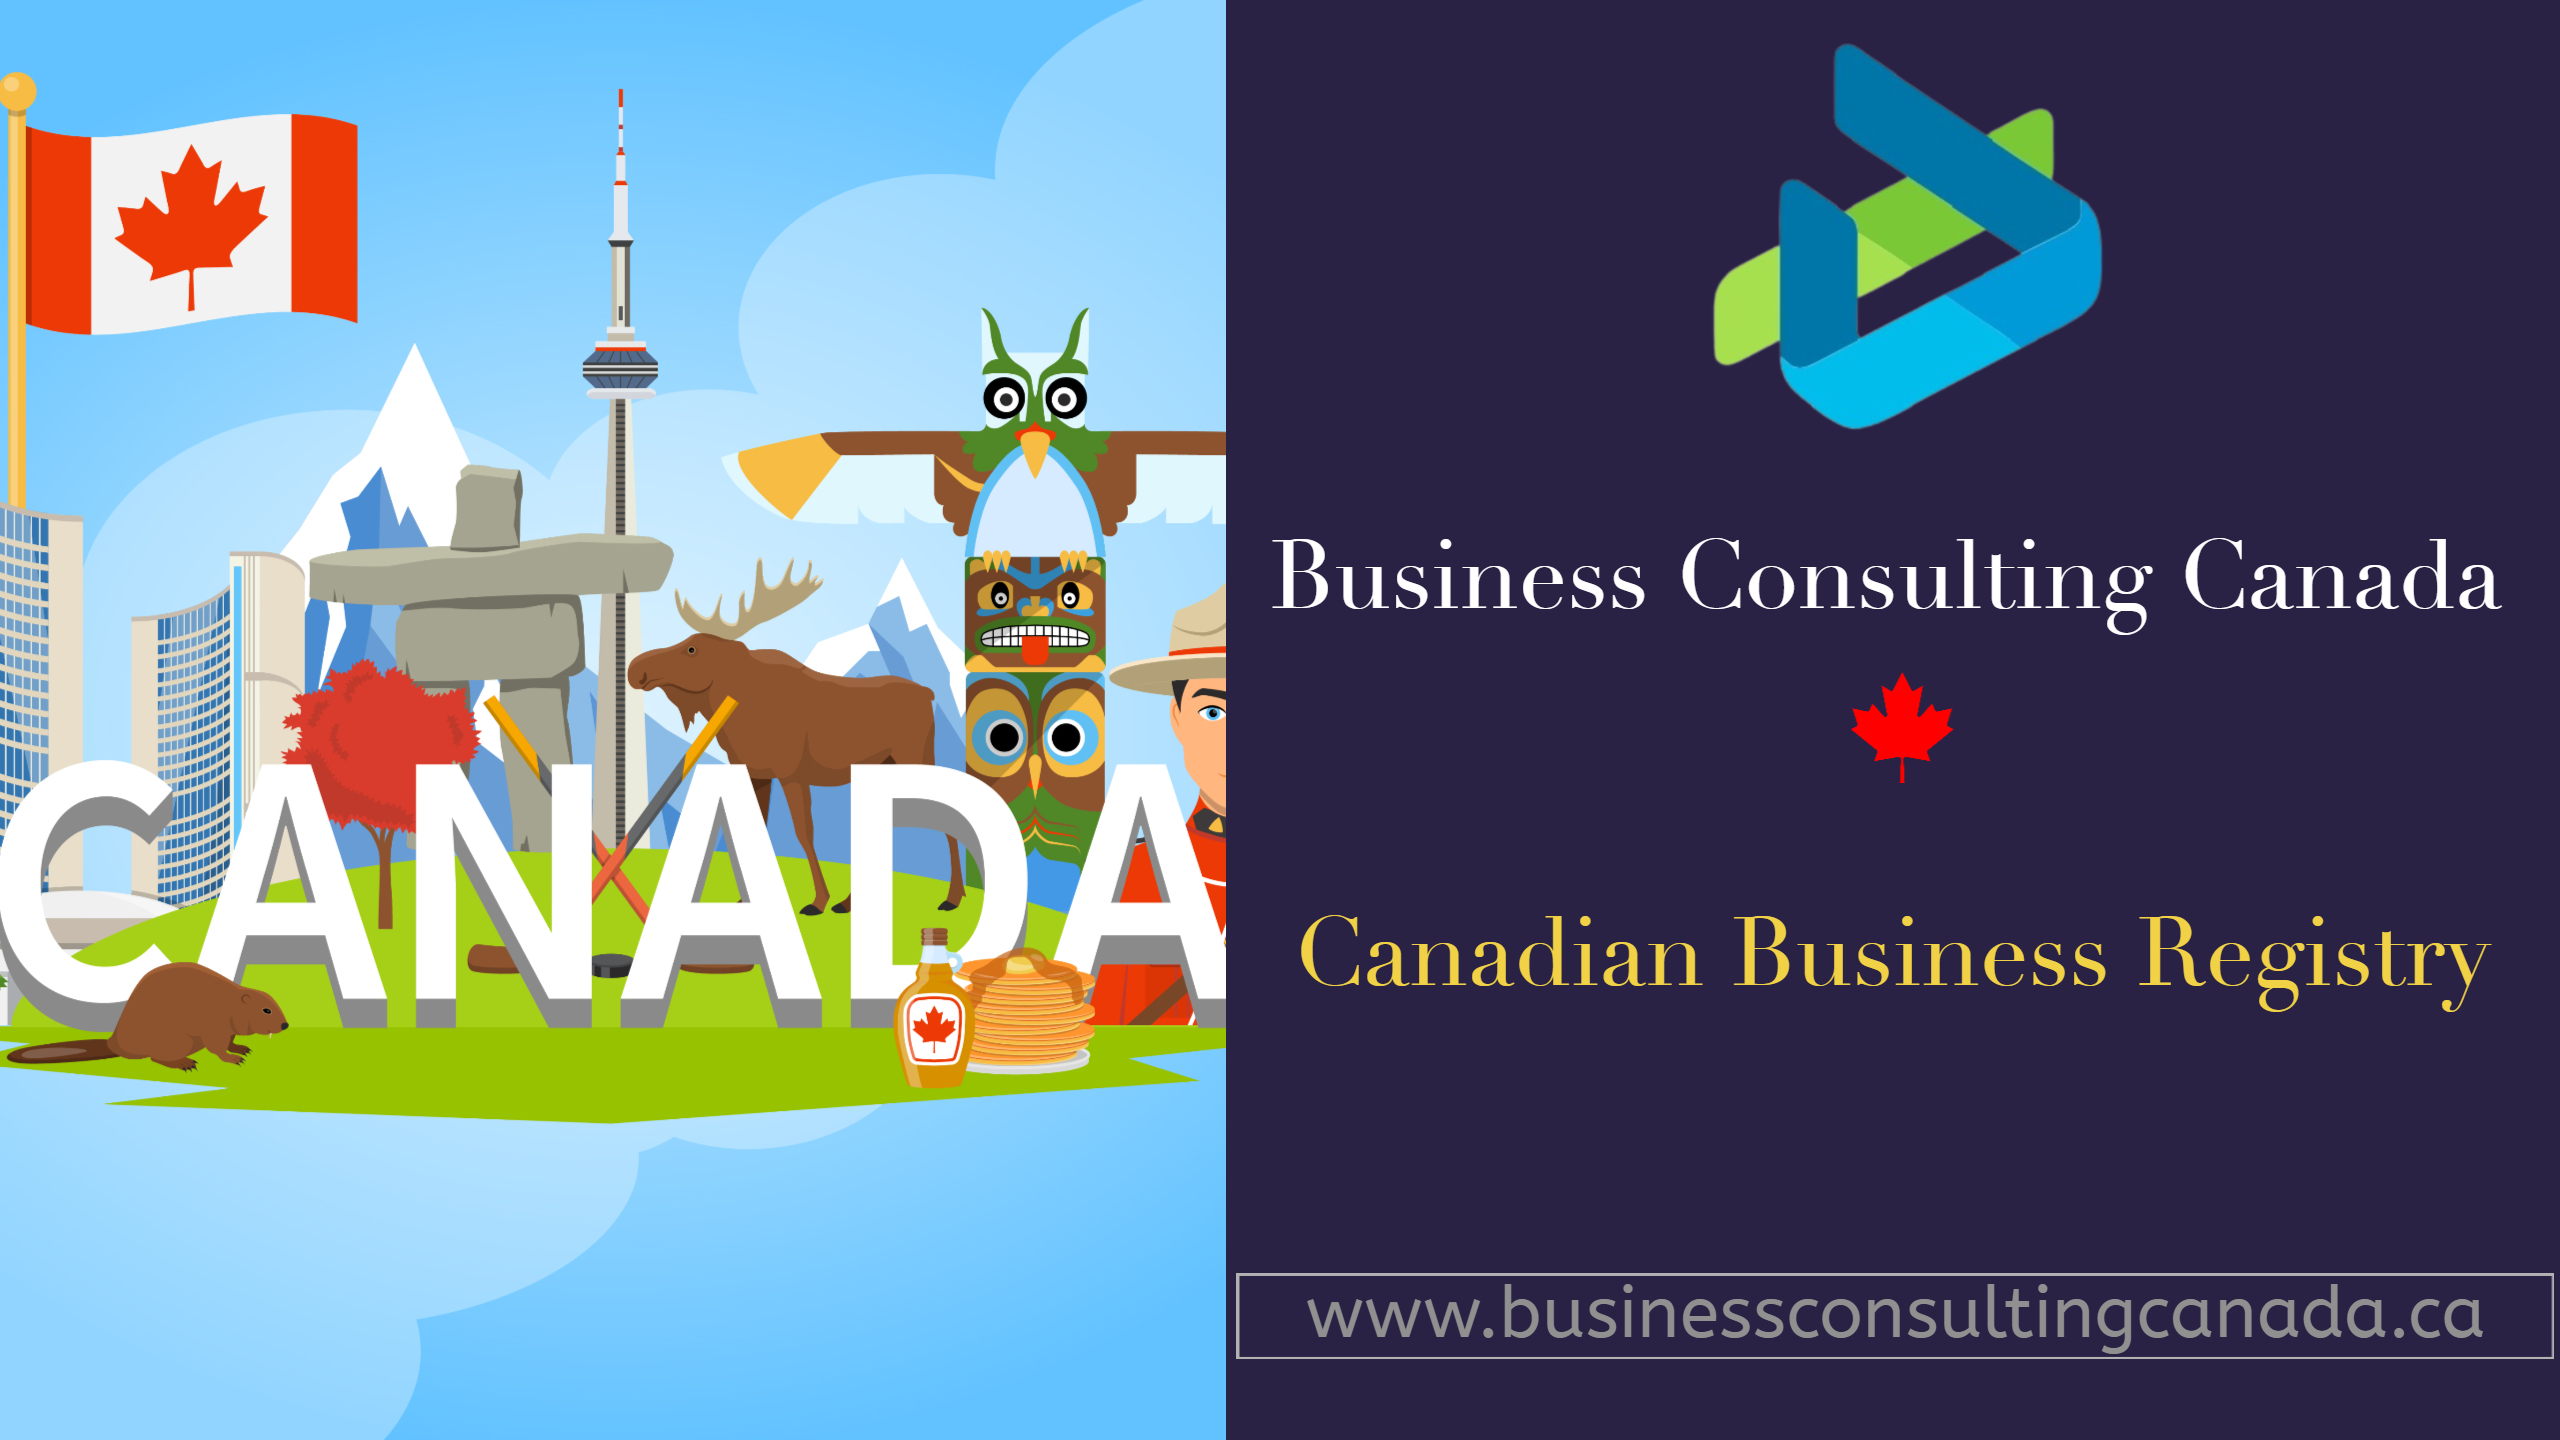 Canadian Business Registry